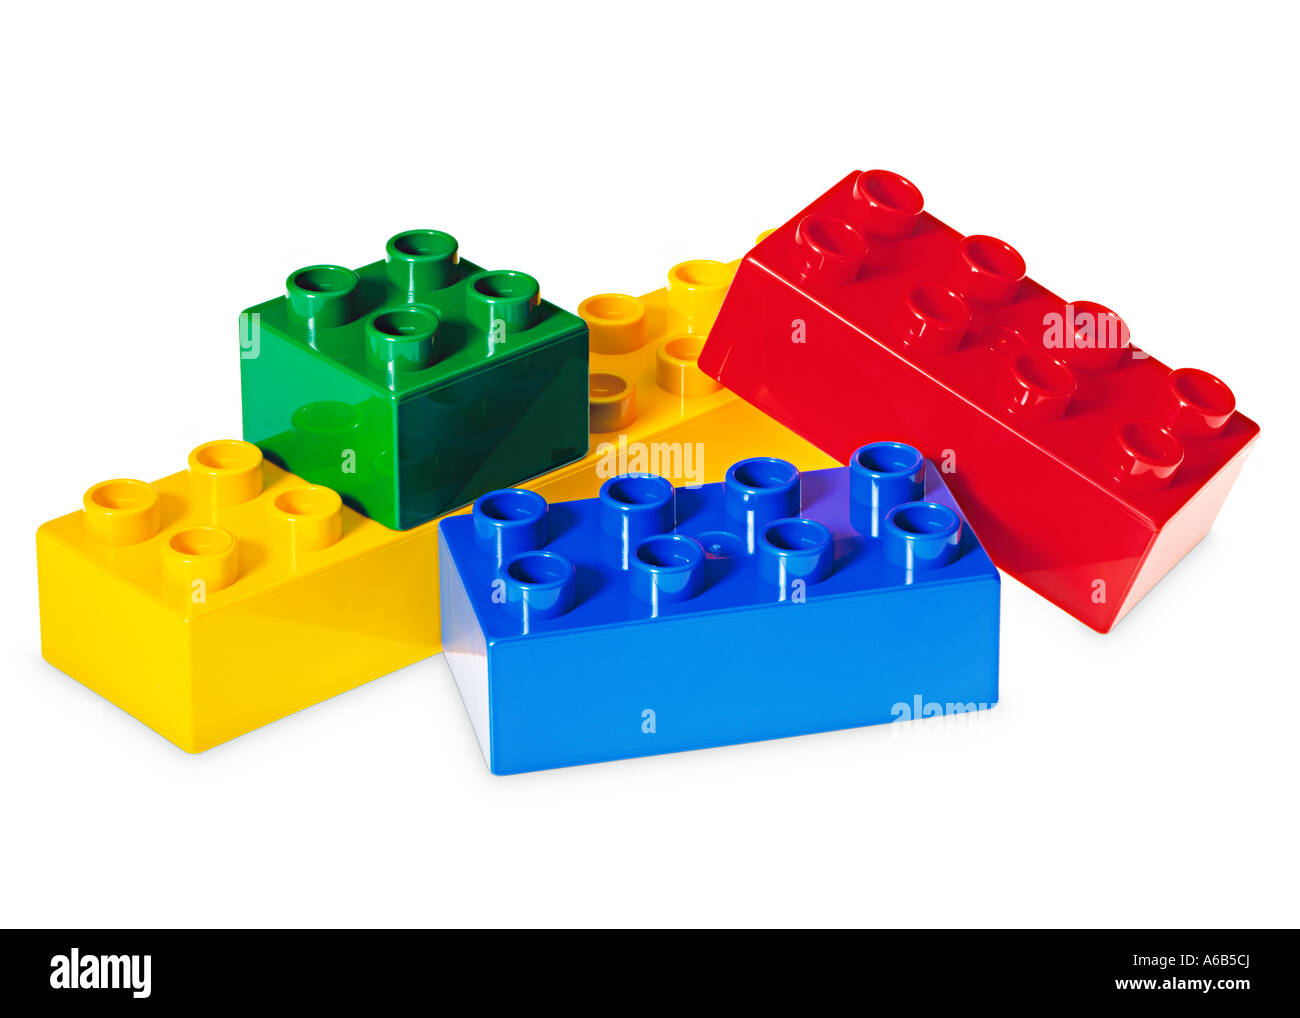 lego coloured bricks symbol of childhood construction creativity imagination variation variety Stock Photo